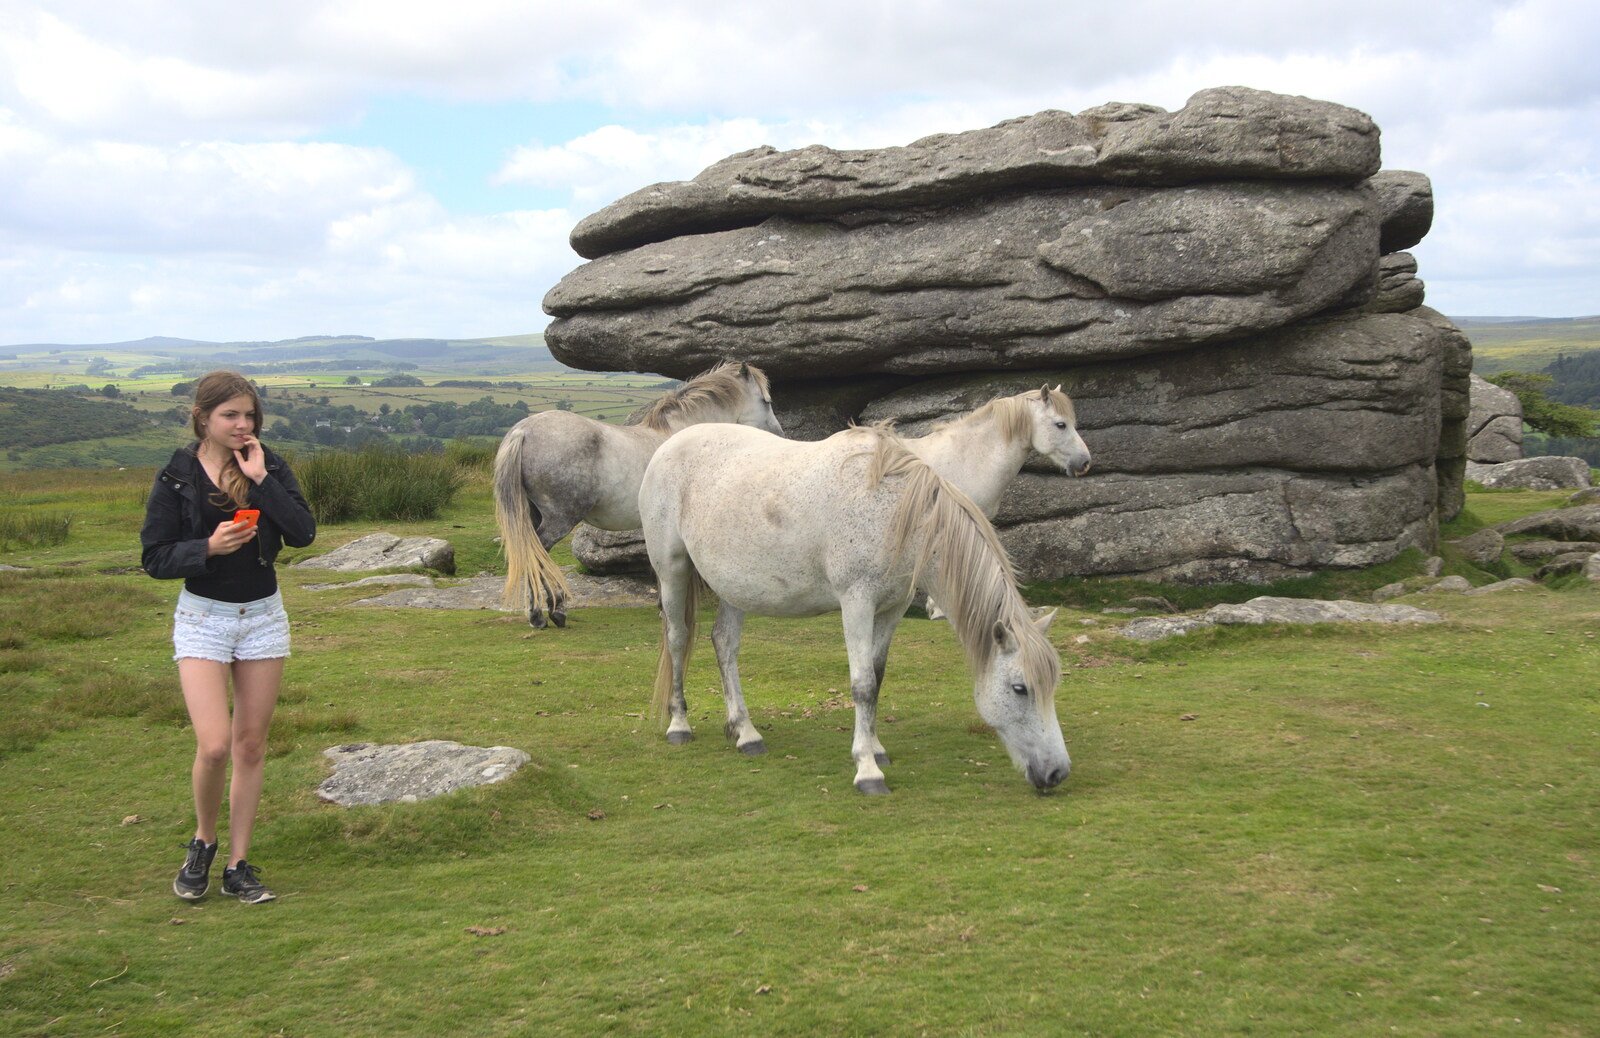 Sydney gets some photos of Dartmoor ponies from Badger's Holt and Bronze-Age Grimspound, Dartmoor, Devon - 10th August 2016